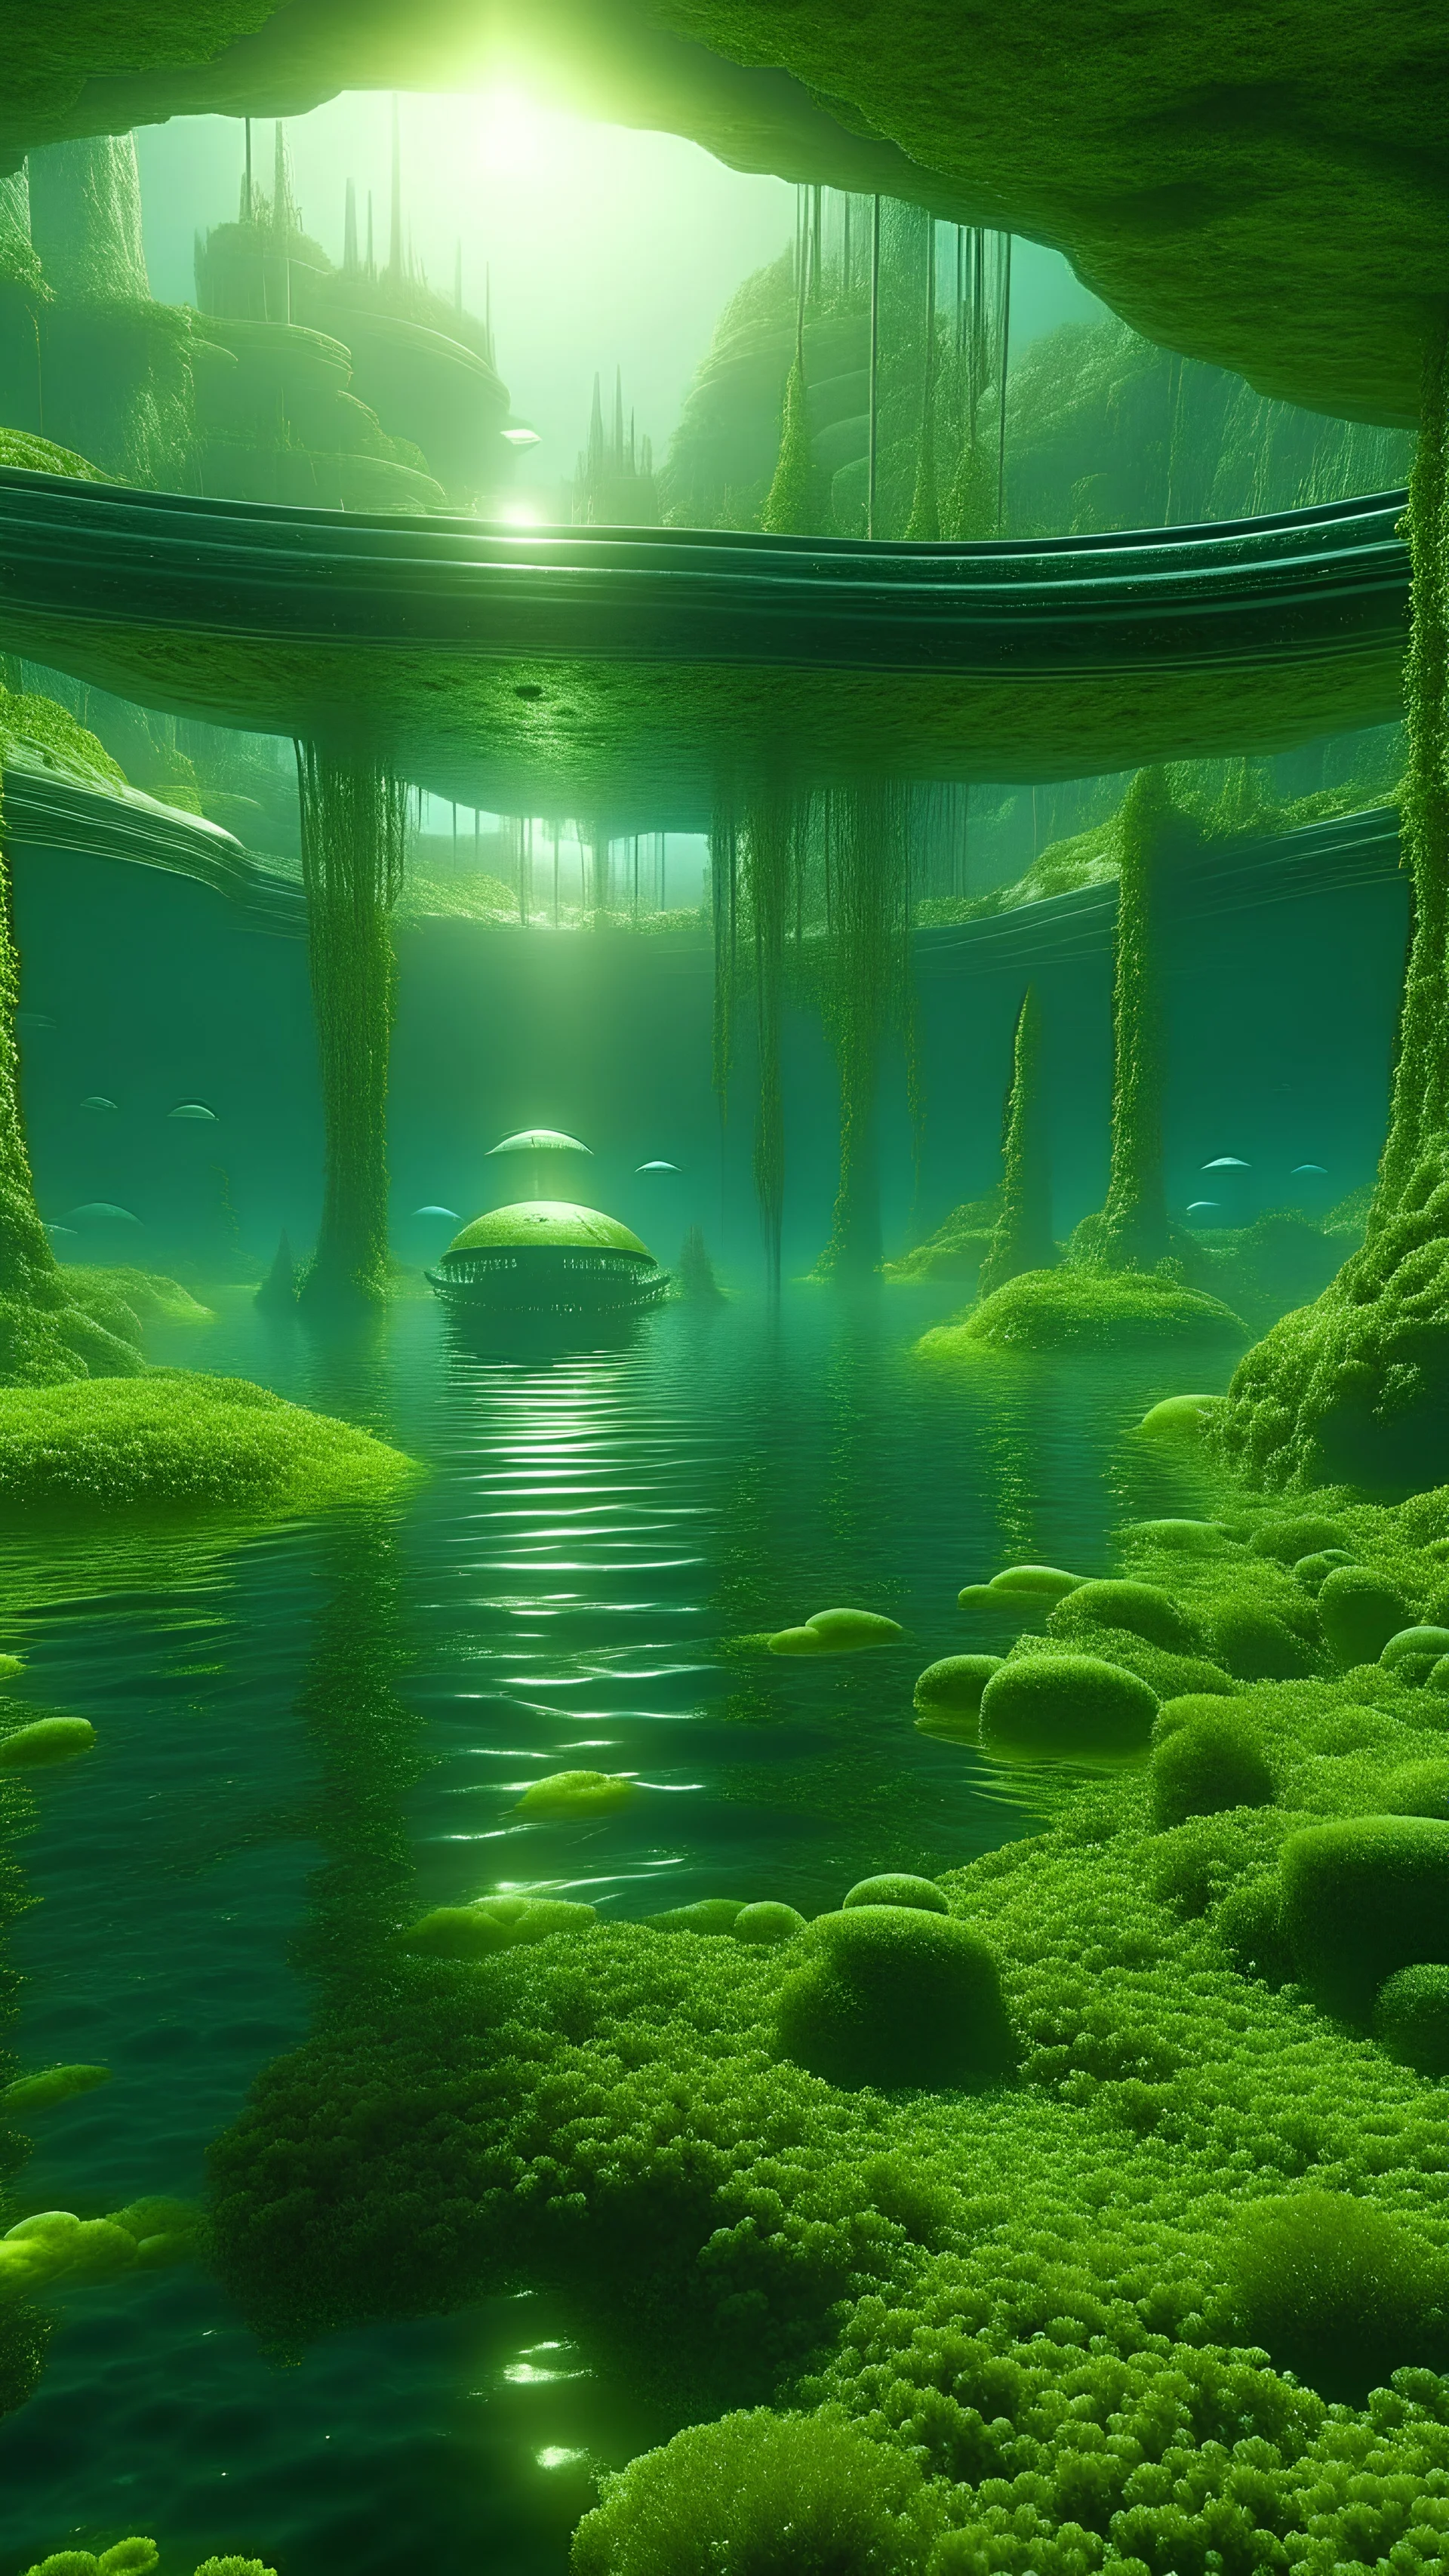 star wars inspired, underwater alien city, swamp, 4k photo, hyperrealistic